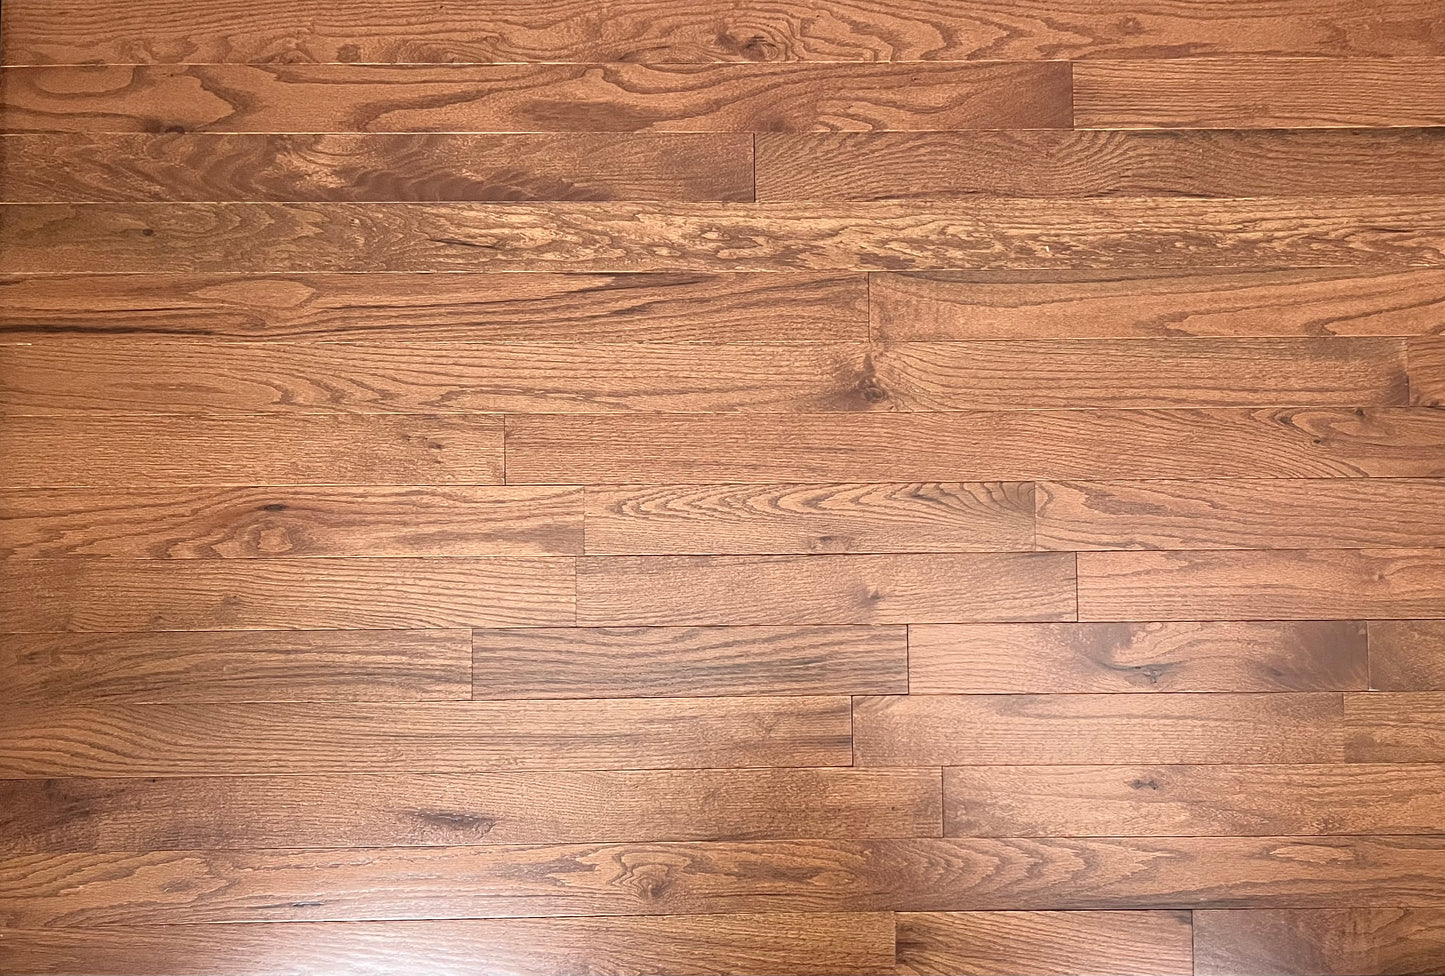 3 1/4" x 3/4" Solid Oak Auburn Hardwood Flooring